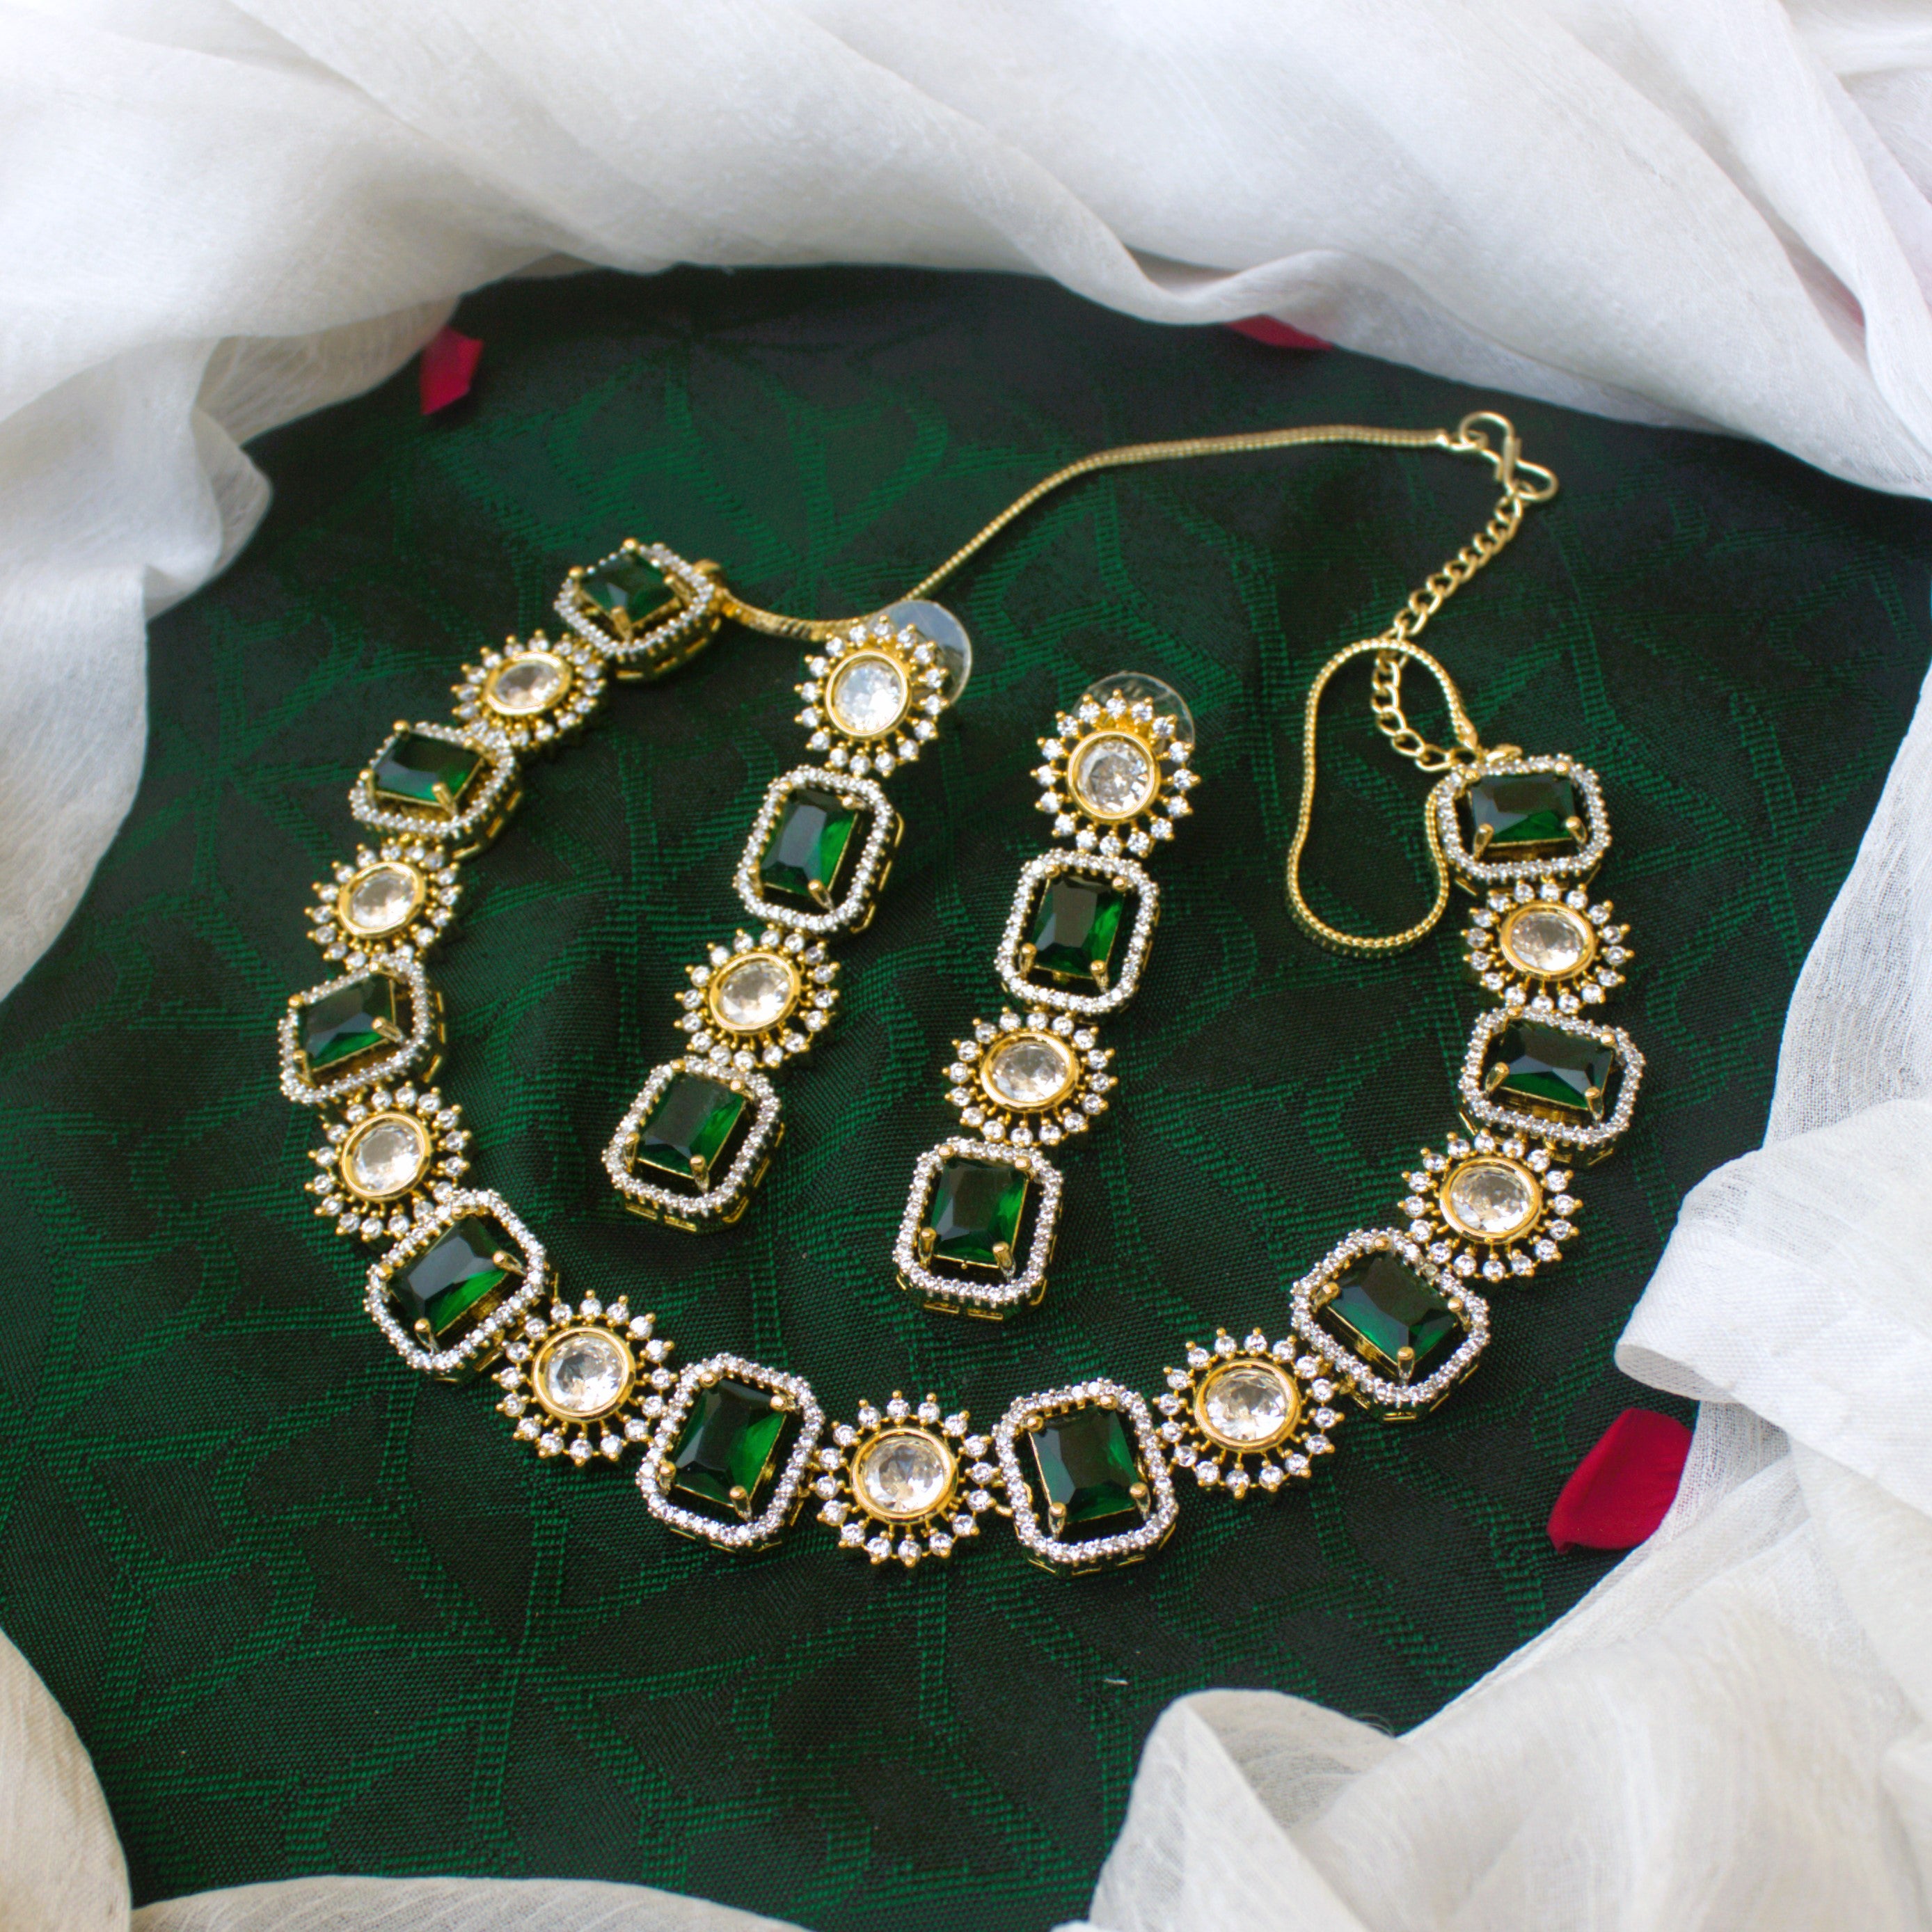 Khwabeeda Diamond And Emerald Necklace – Timeless Indian Jewelry | Aurus